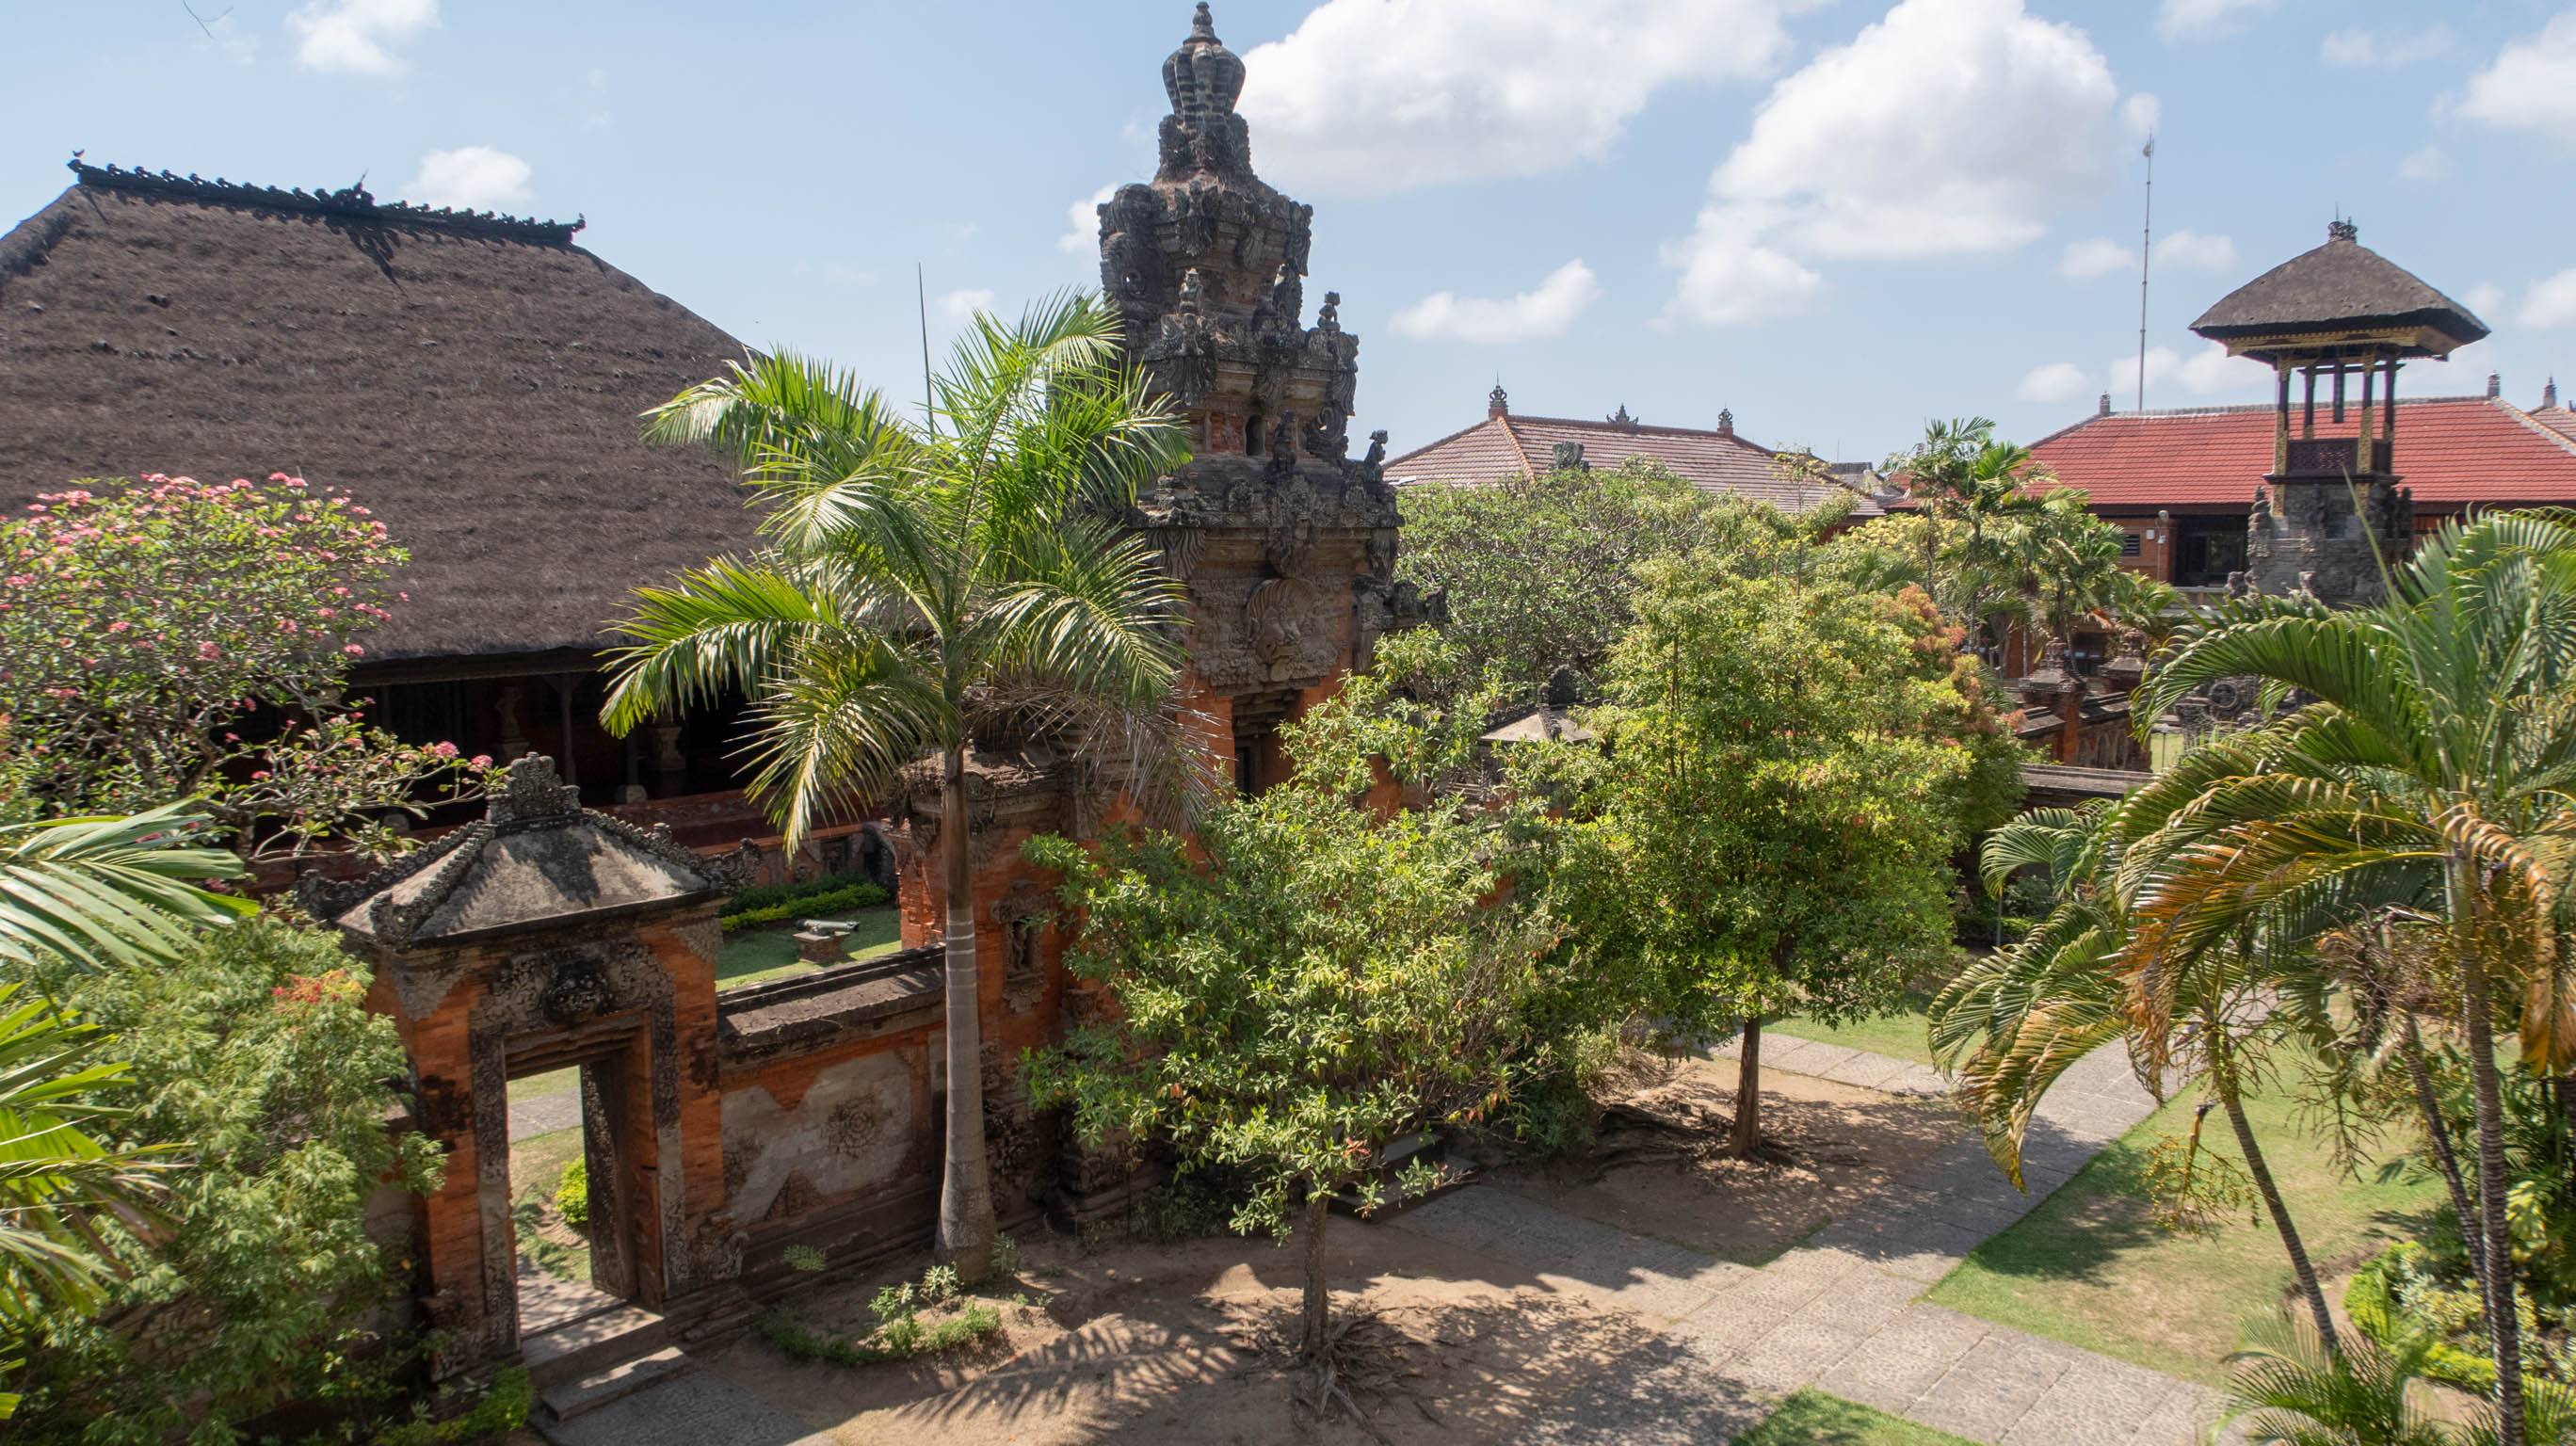 My Visit to  Bali Museum in Denpasar